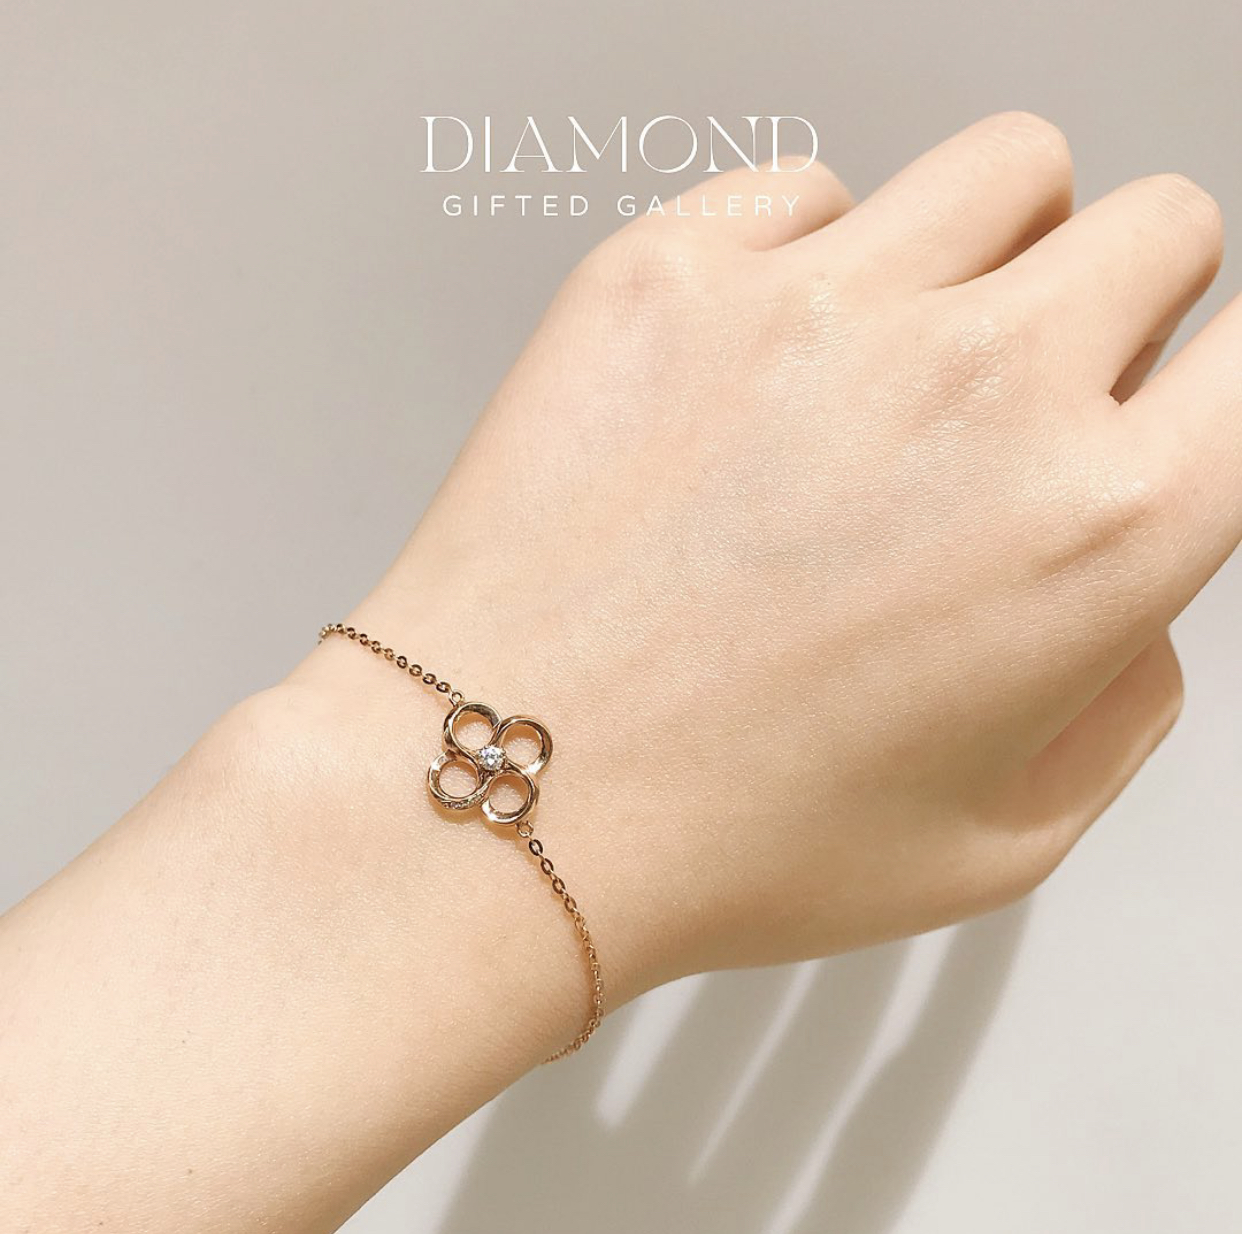 Diamond Bracelet by Gifted Gallery